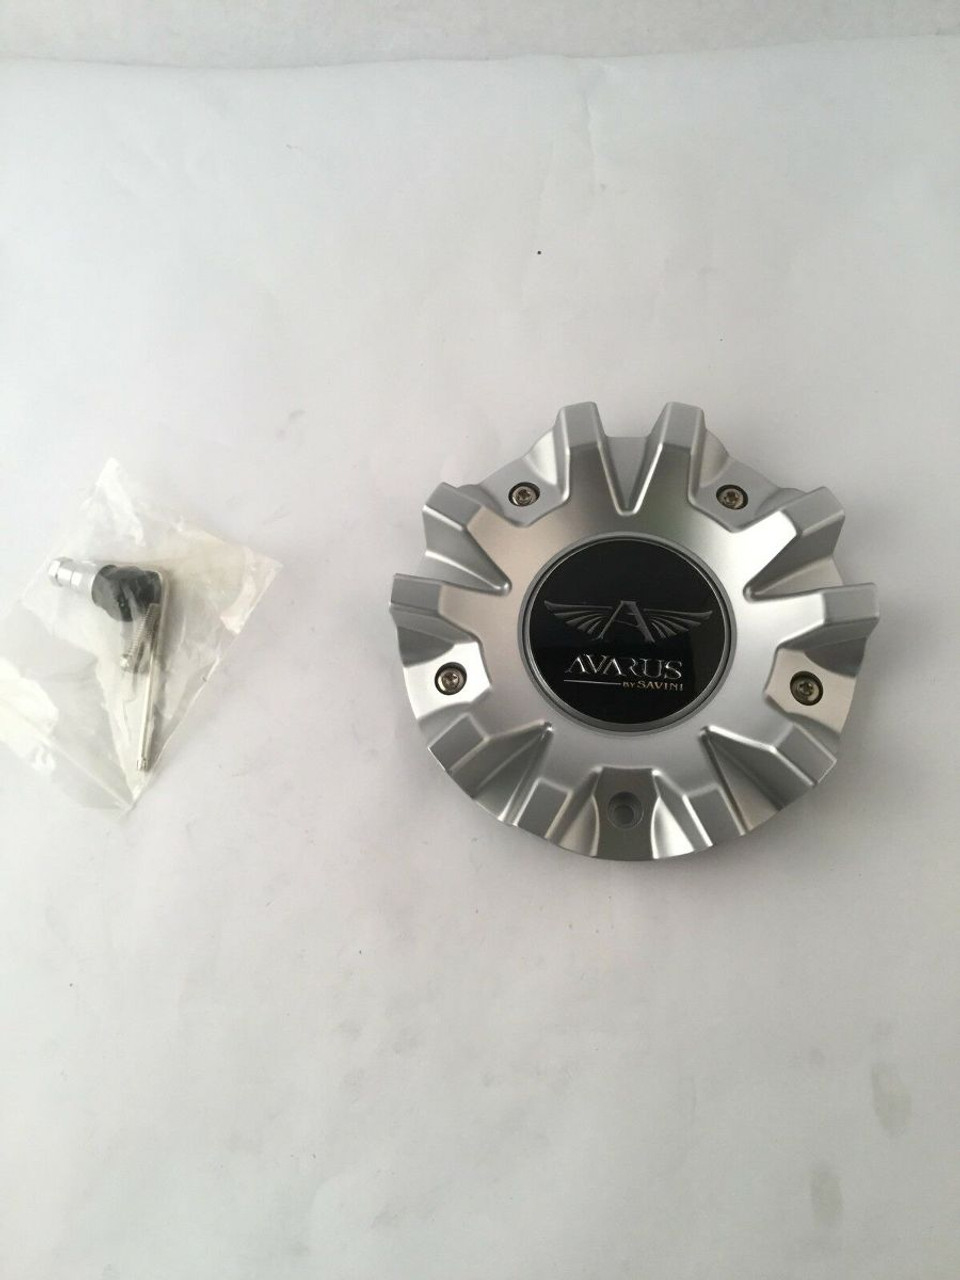 Avarus AV3 Wheel Center Cap Painted Silver w/ Black MS-CAP-Z216  6" Dia. AVA11